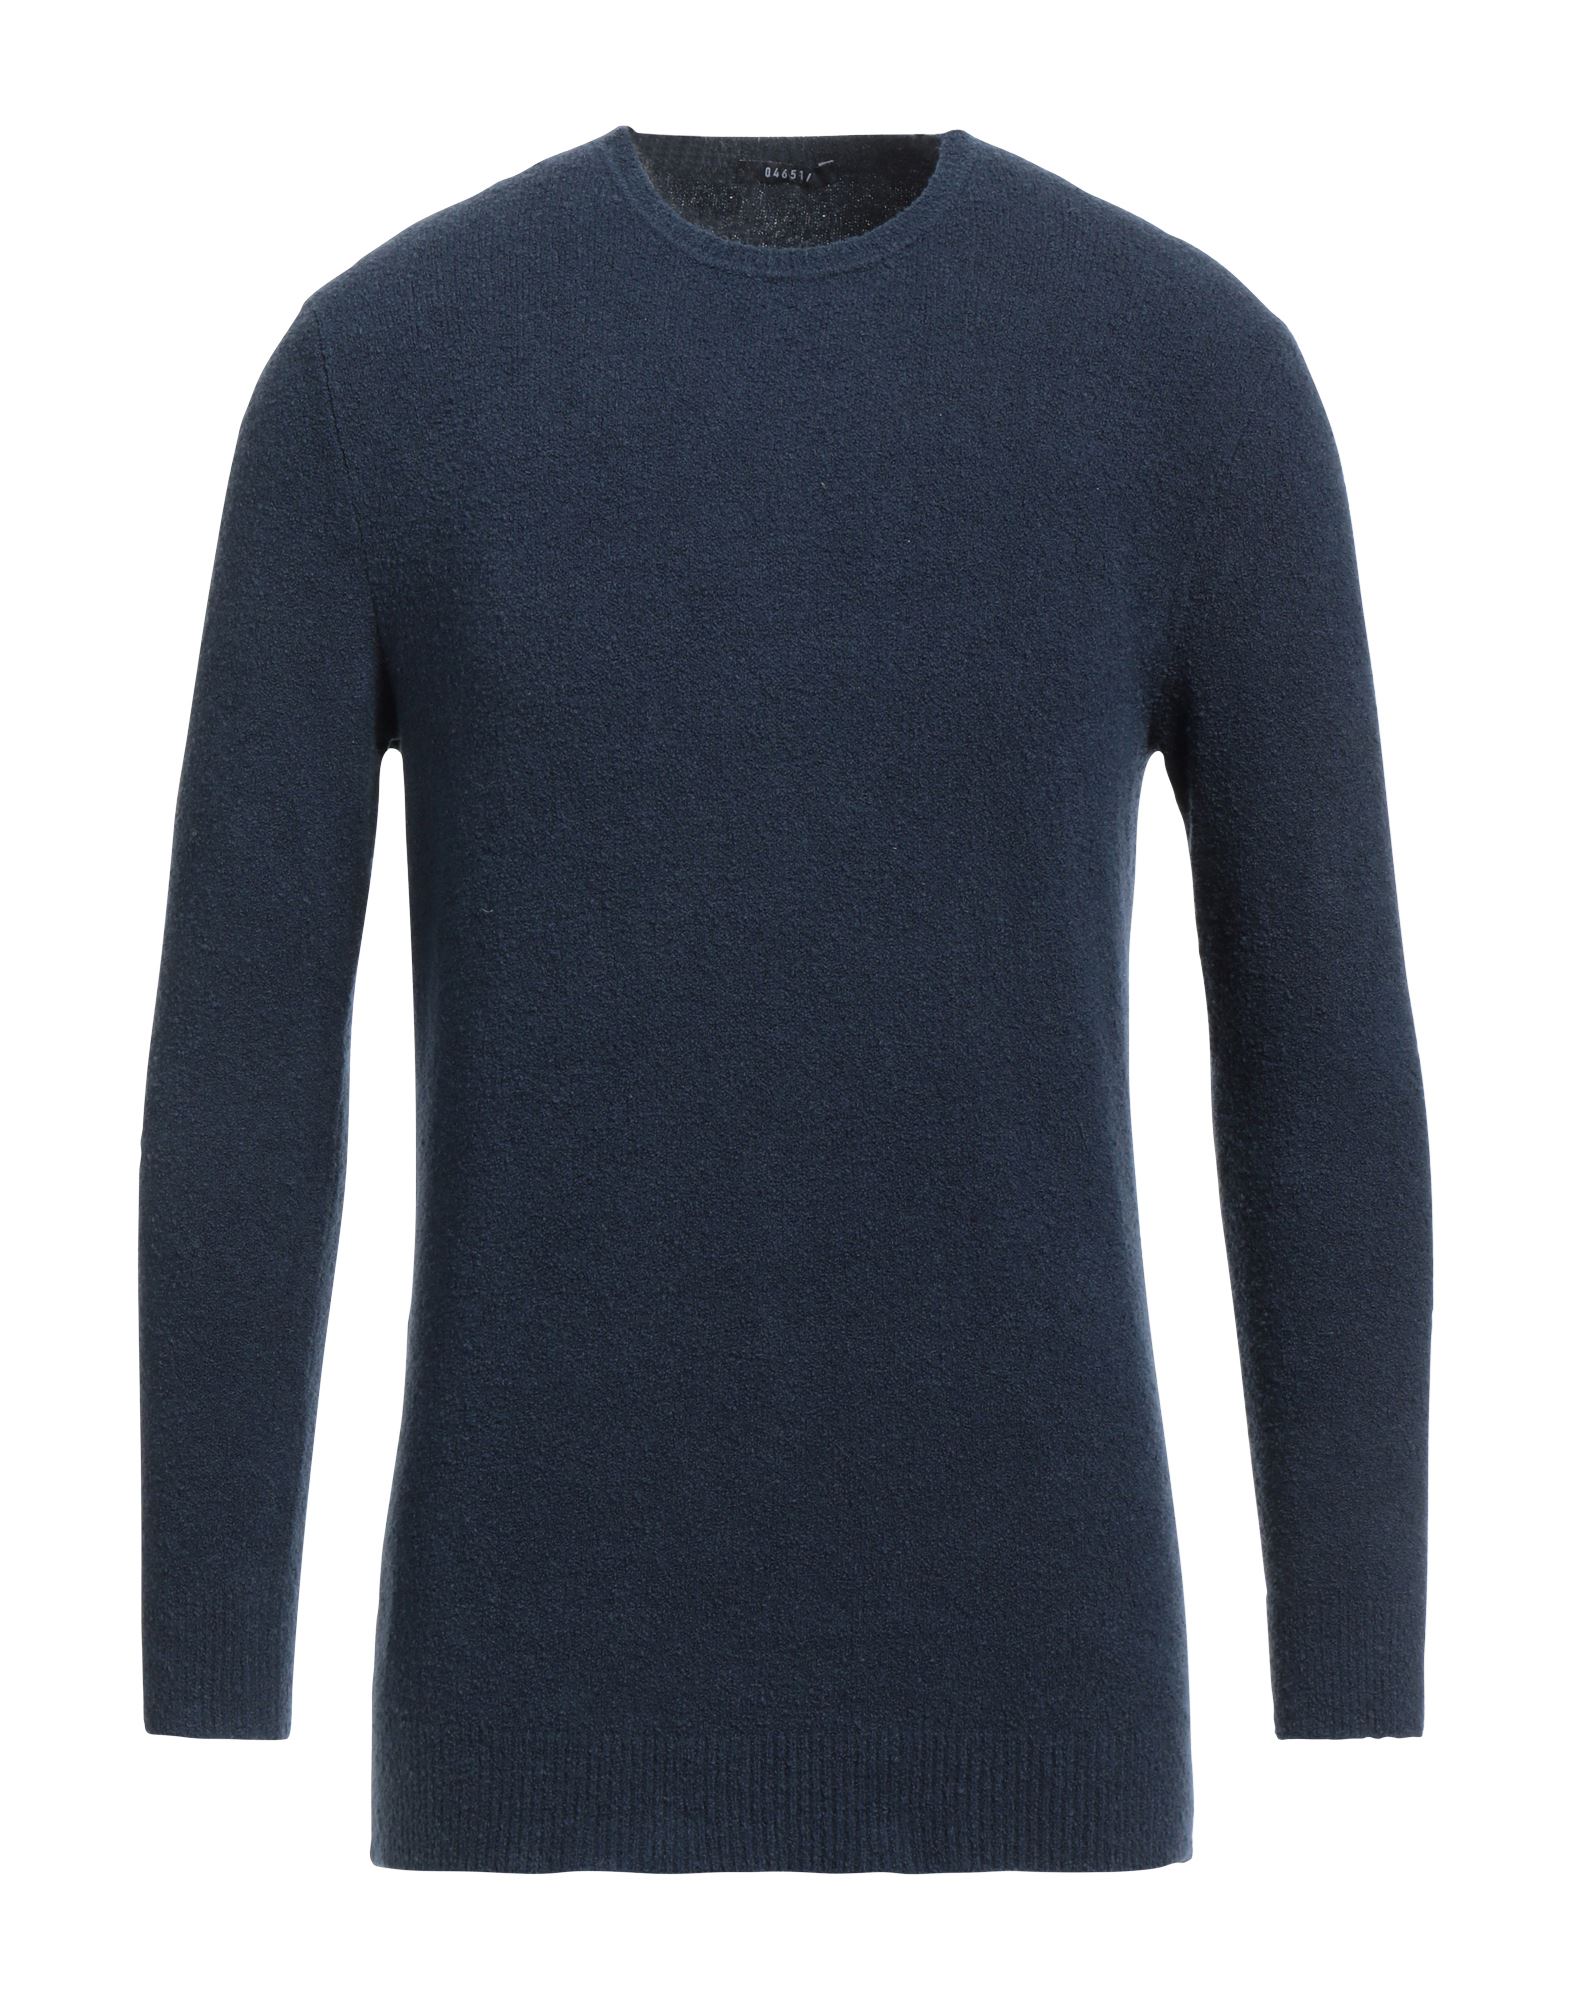 04651/a Trip In A Bag Man Sweater Navy Blue Size Xxl Cotton, Nylon, Elastane